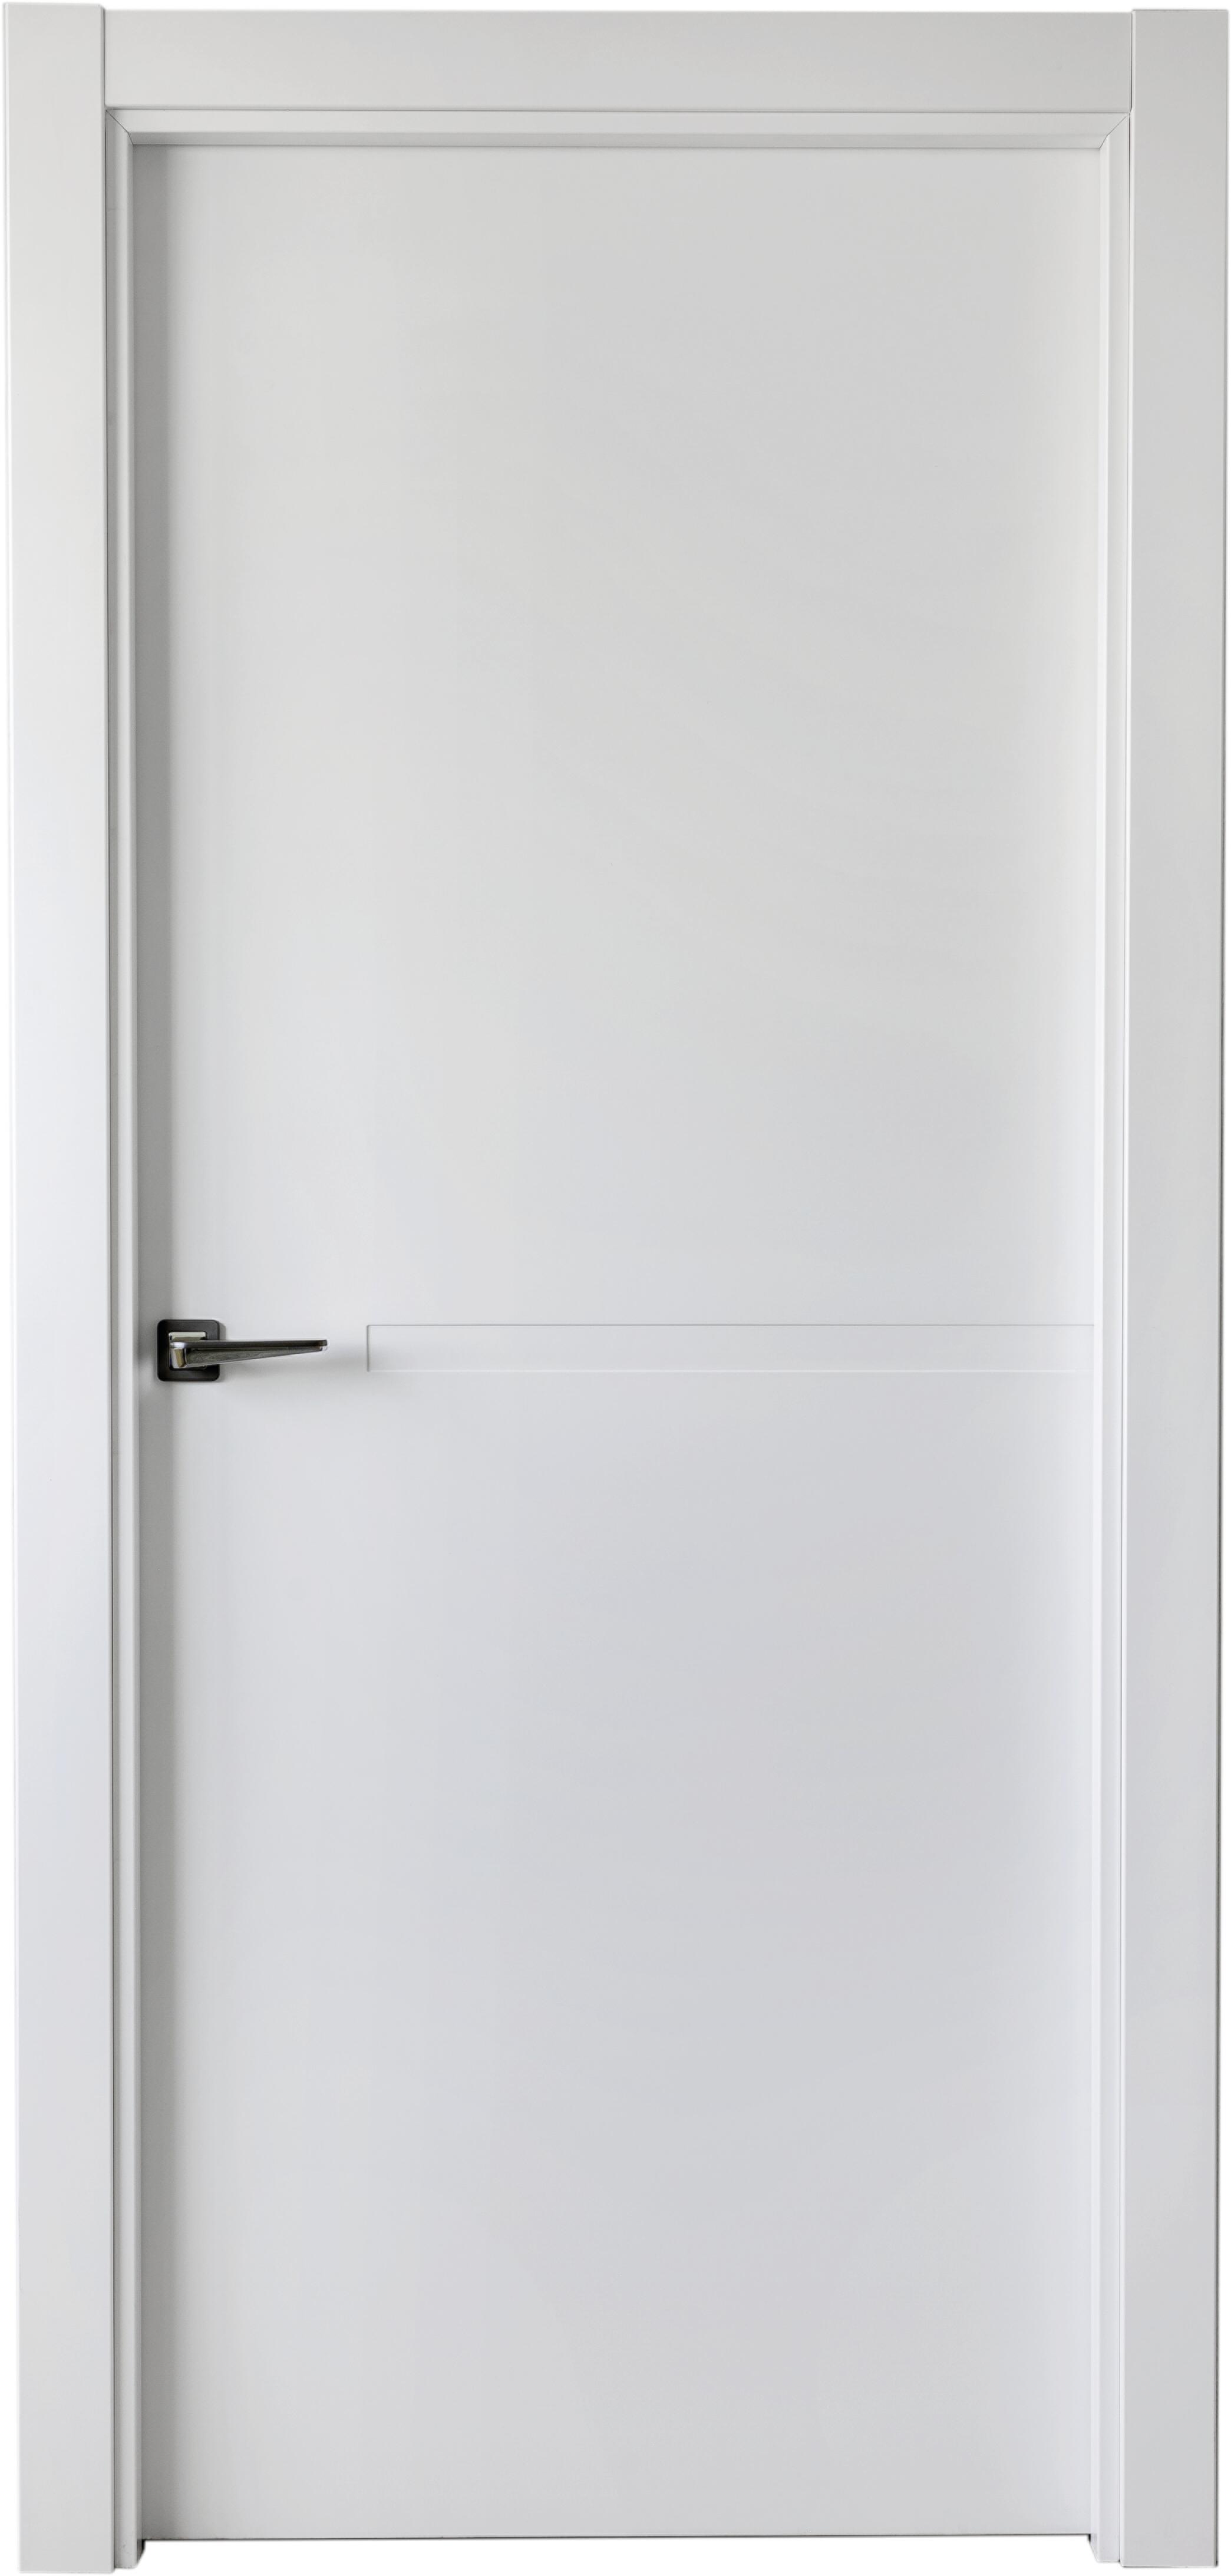 Puerta denver blanco apertura derecha de 11x72,5cm